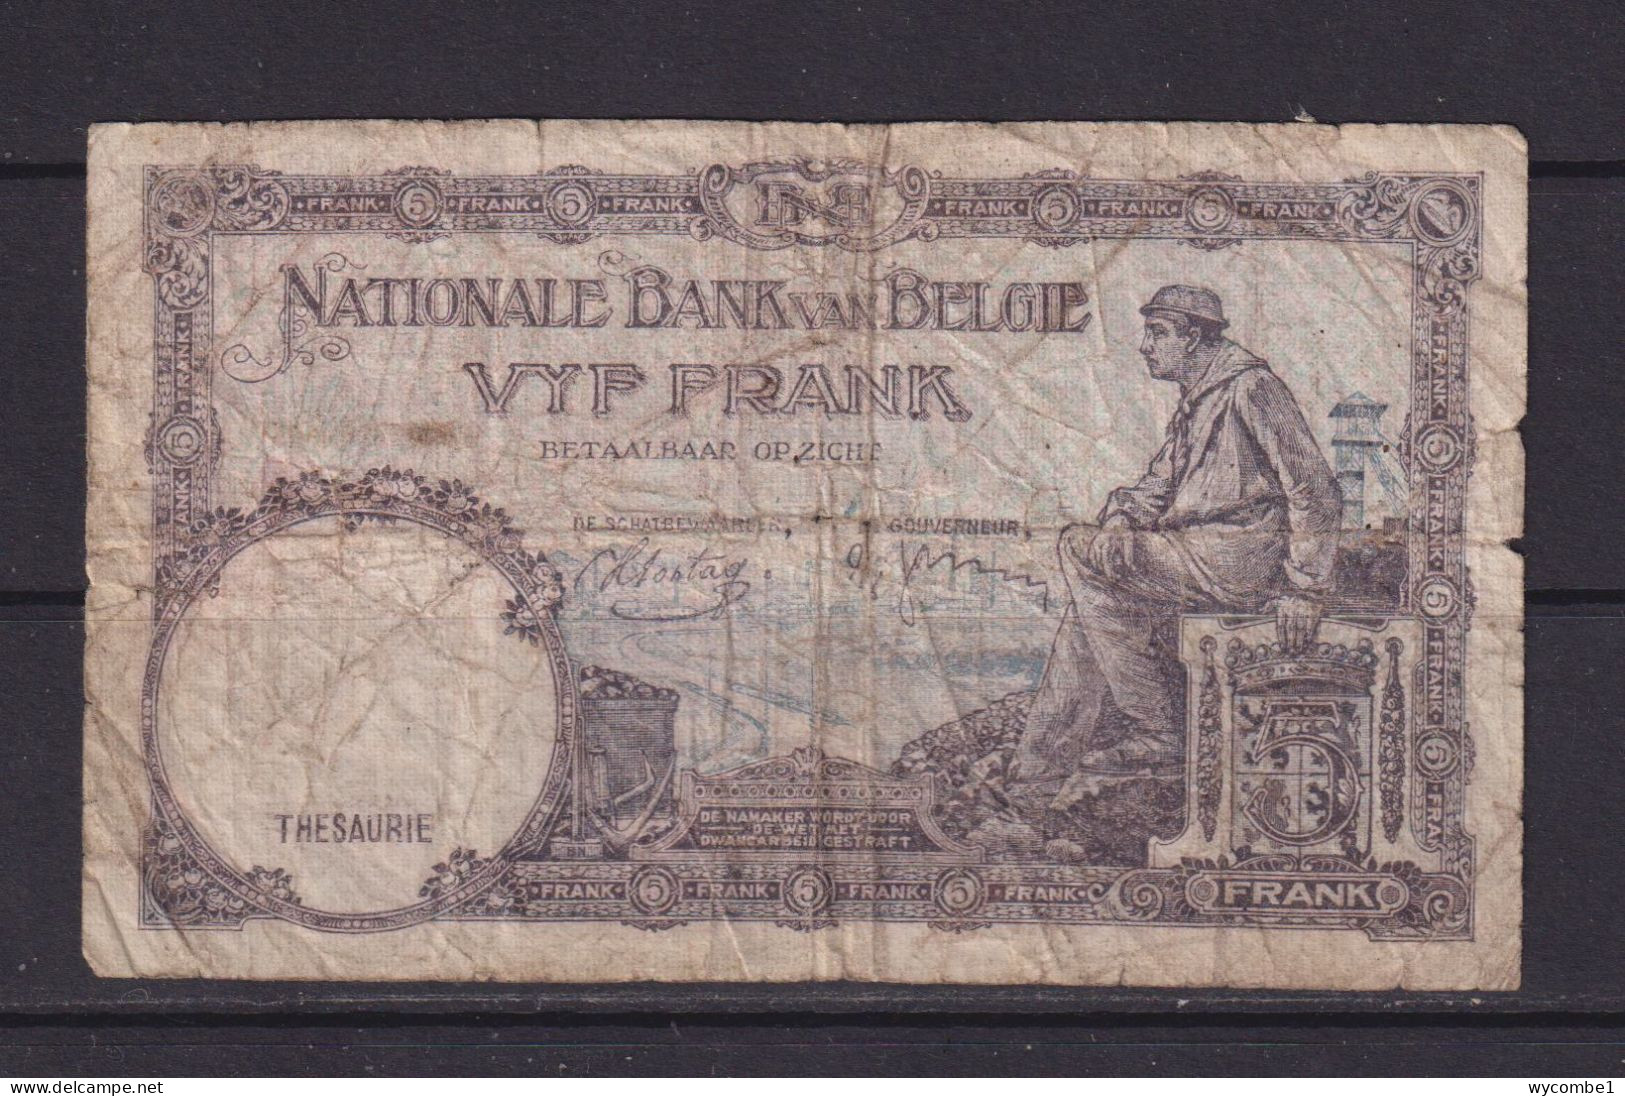 BELGIUM - 1938 5 Francs Circulated Banknote - 5 Francos